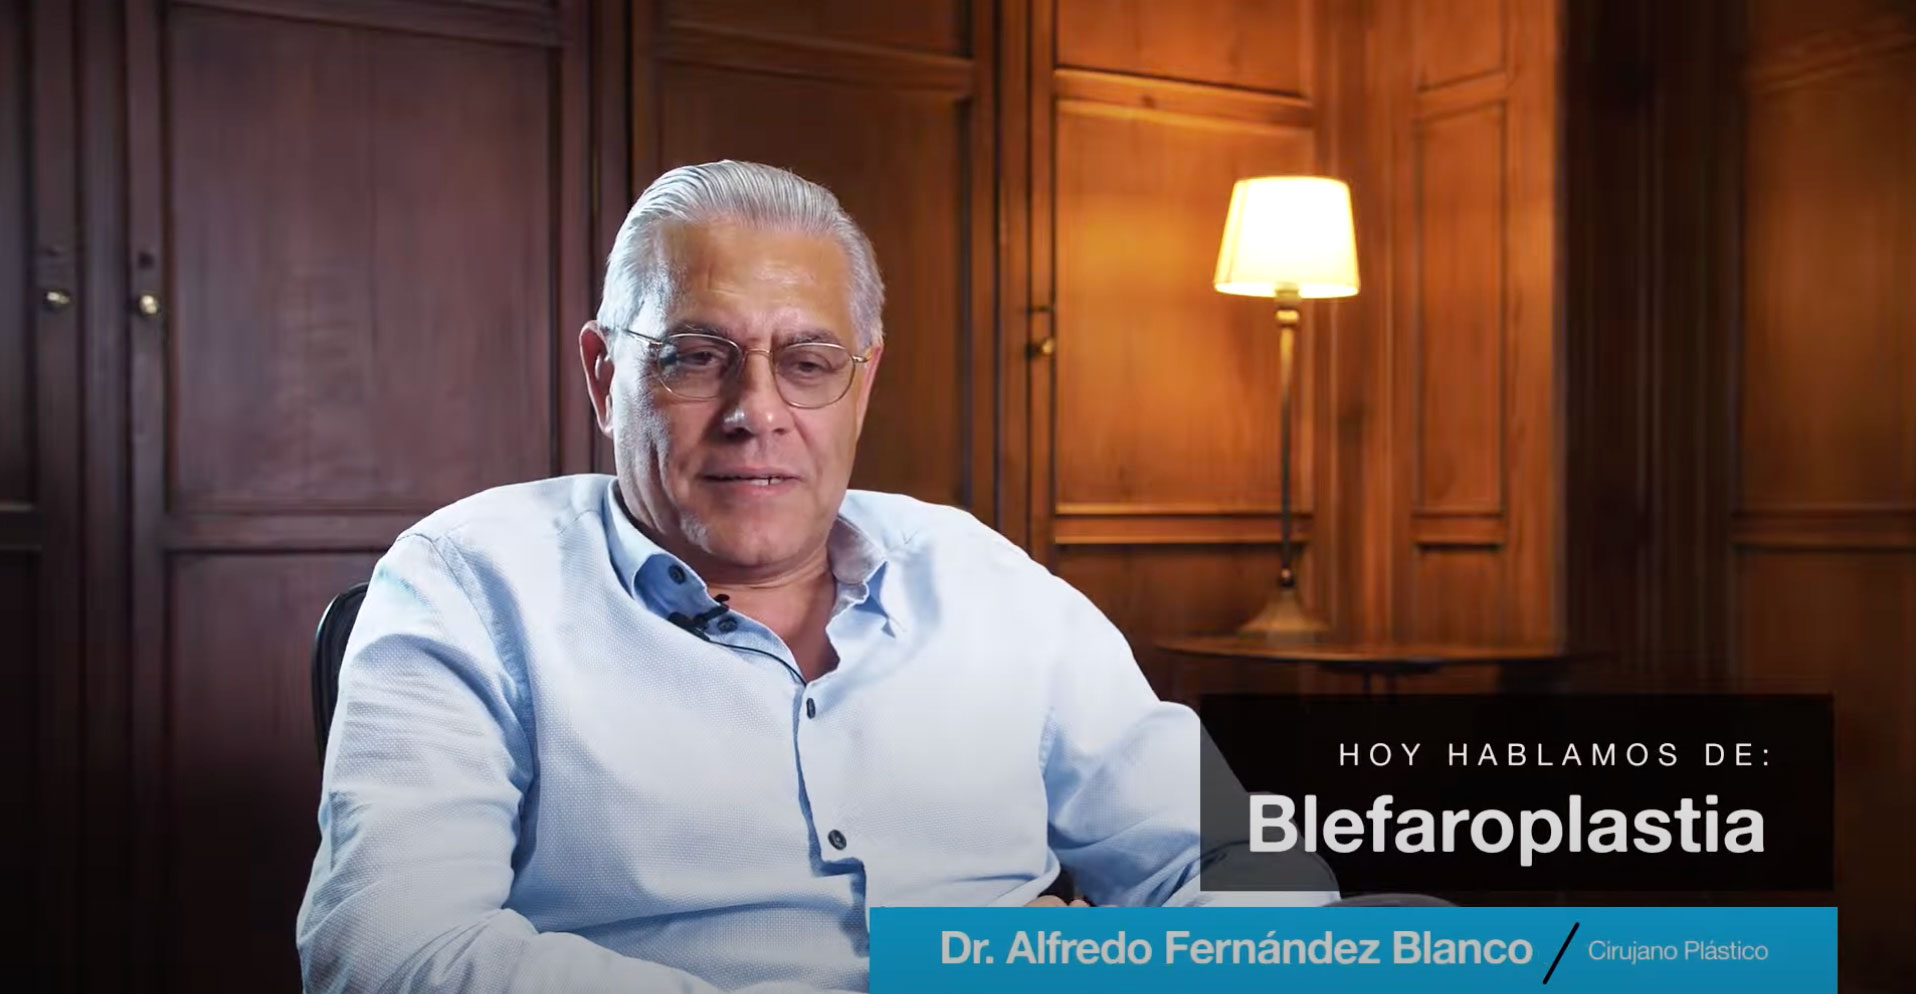 Videoblog del Dr. Fernández Blanco acerca de la blefaroplastia